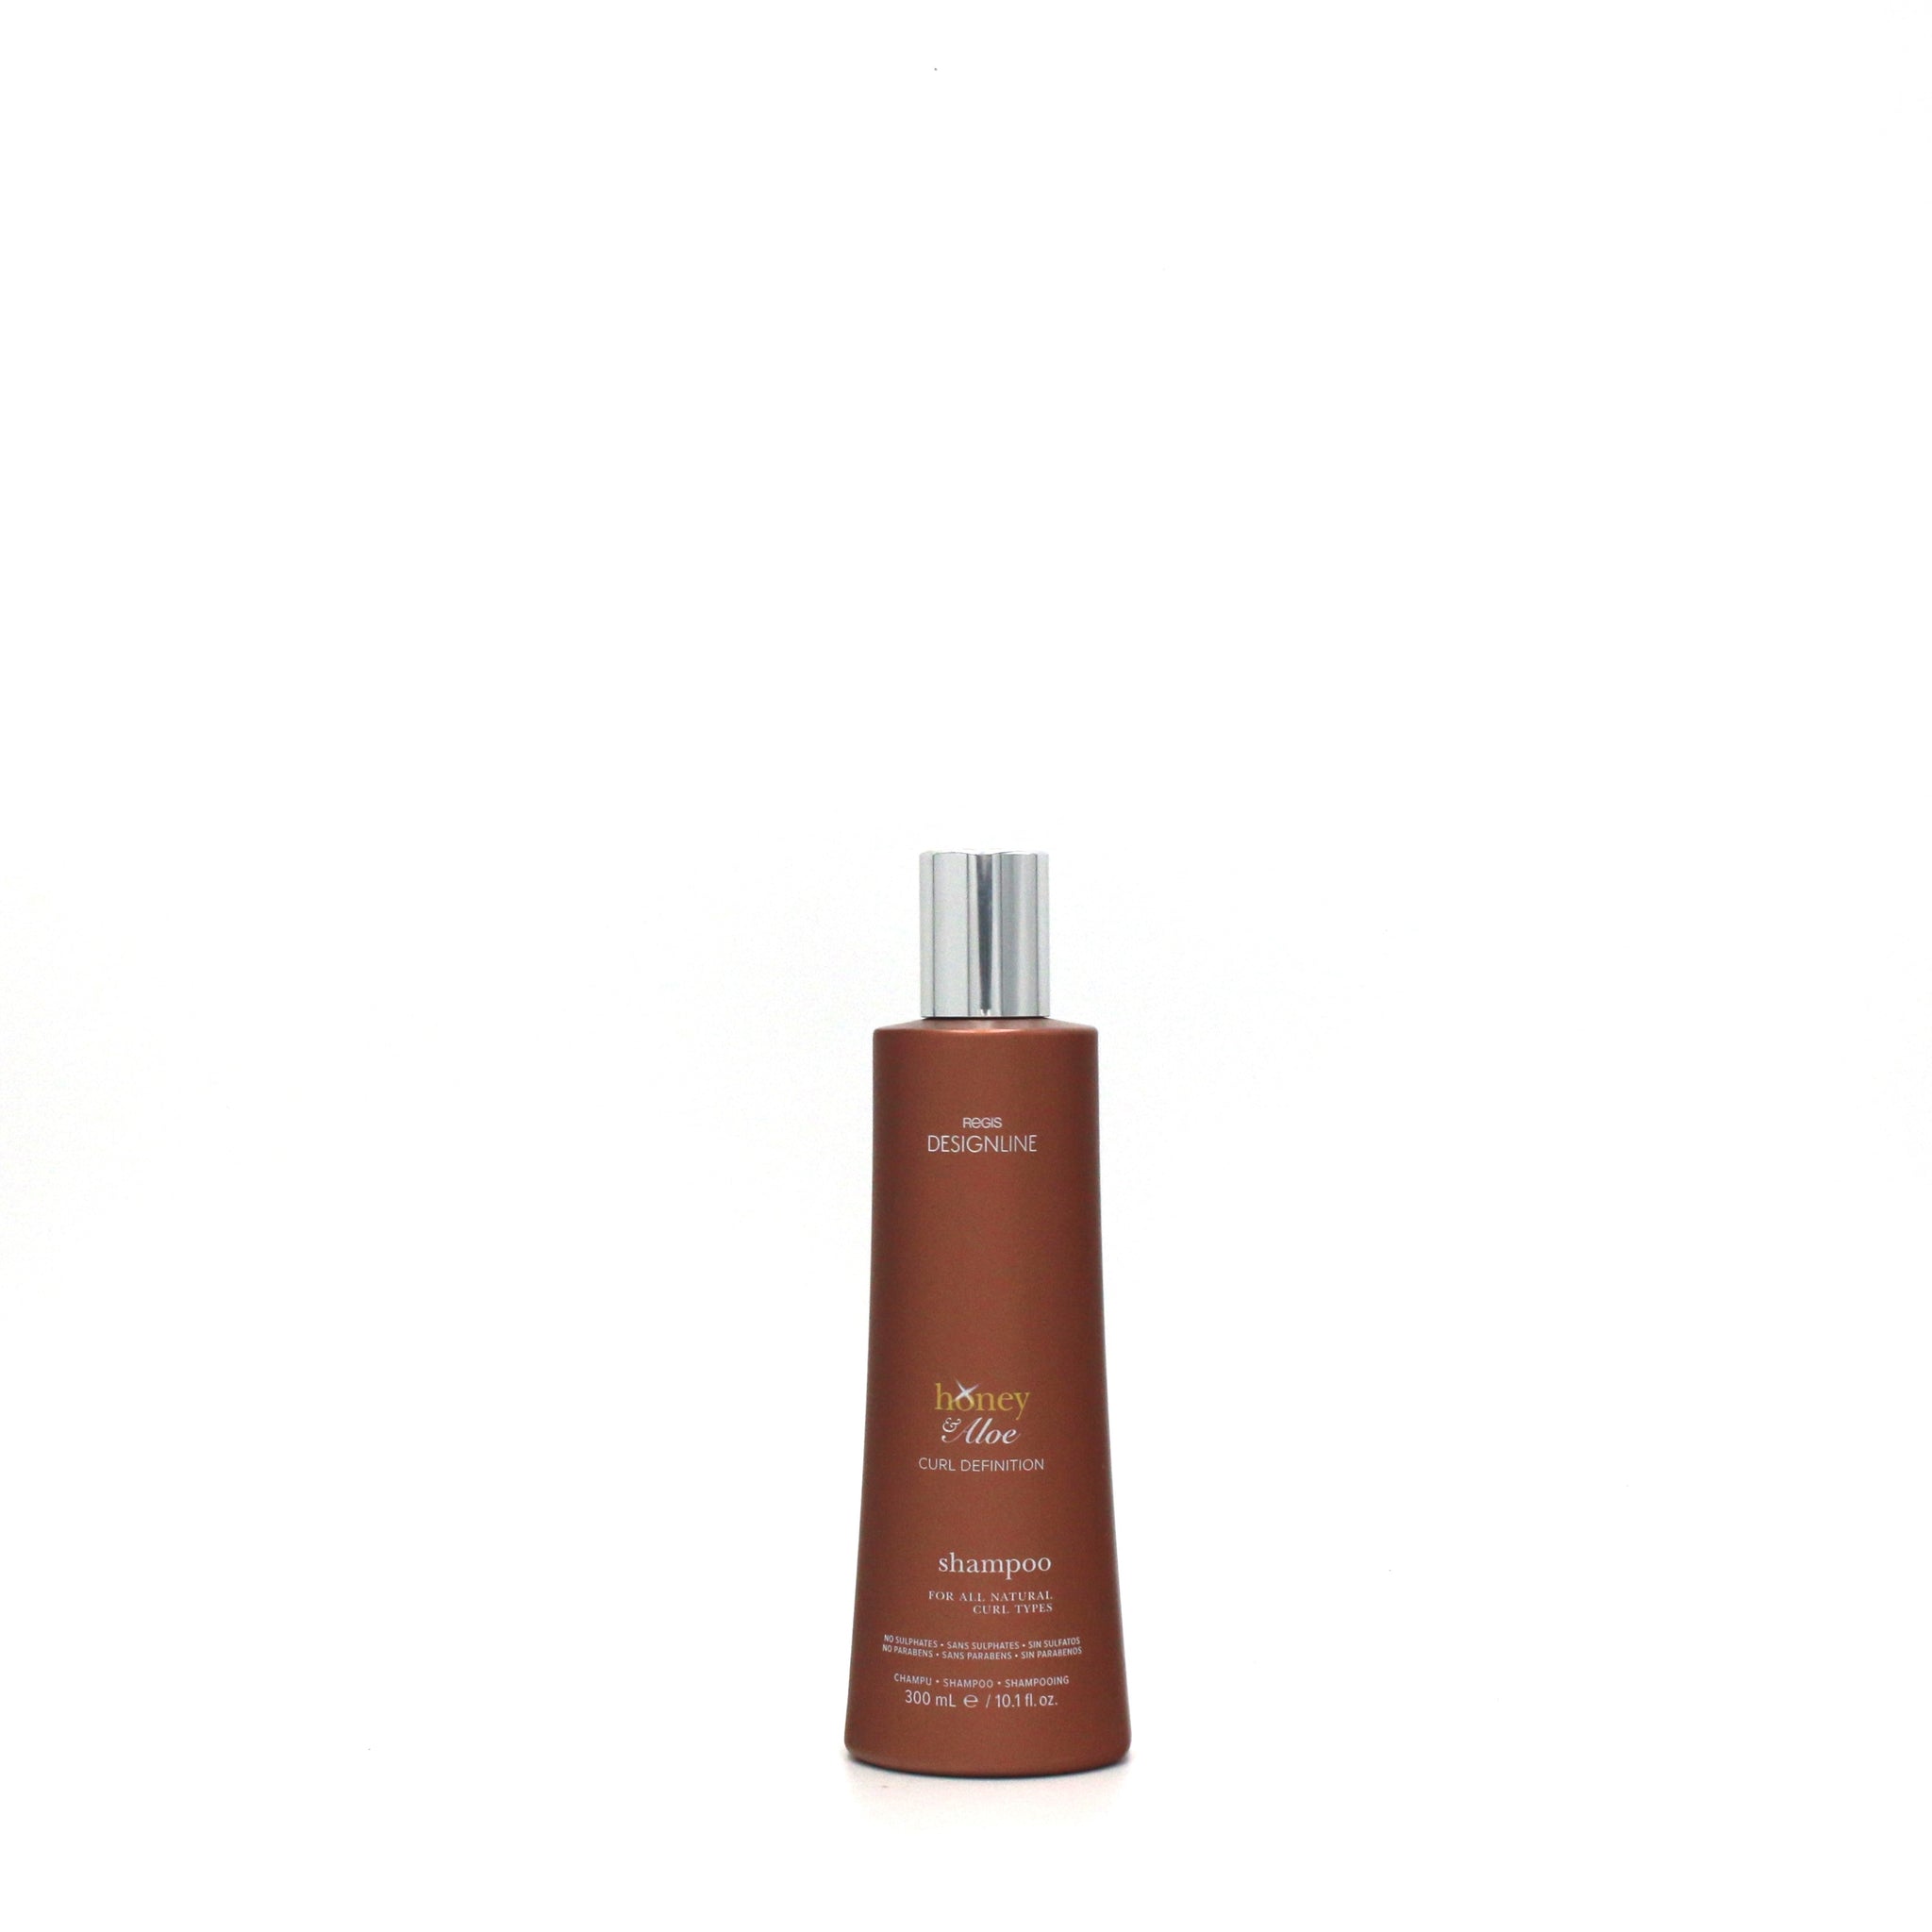 REGIS DESIGNLINE Honey & Aloe Curl Definition Shampoo 10.1 oz